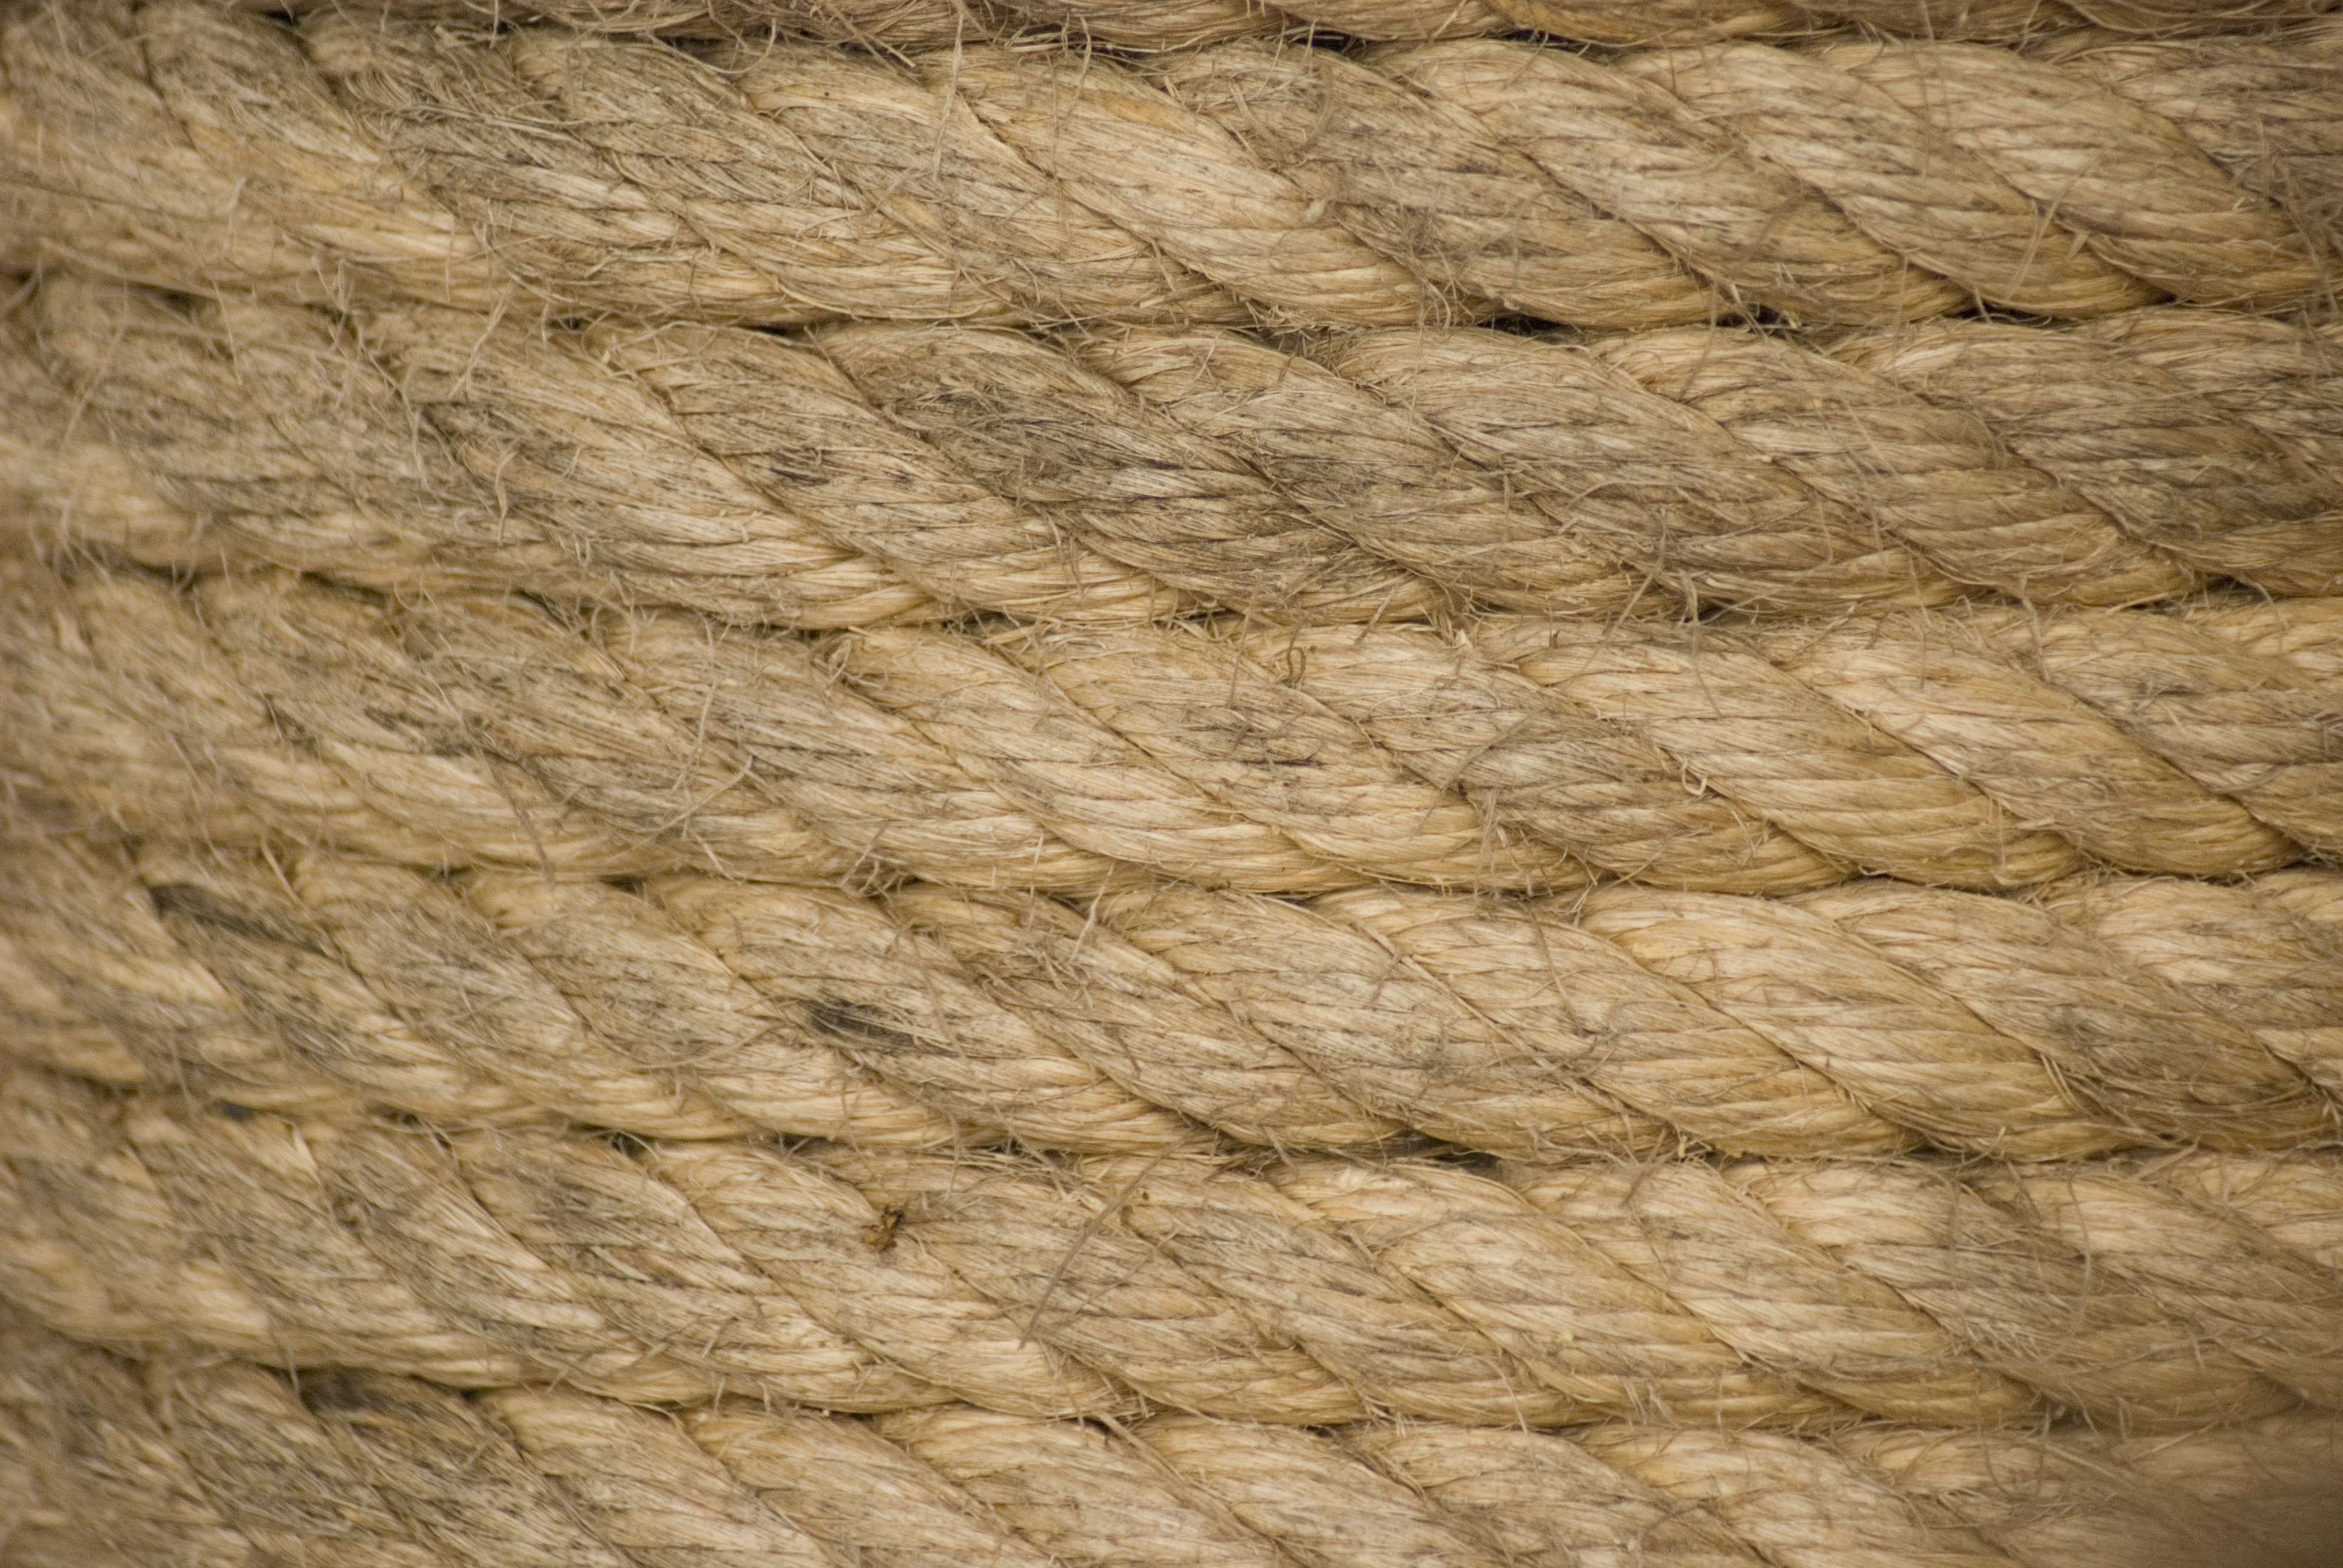 Rope texture photo